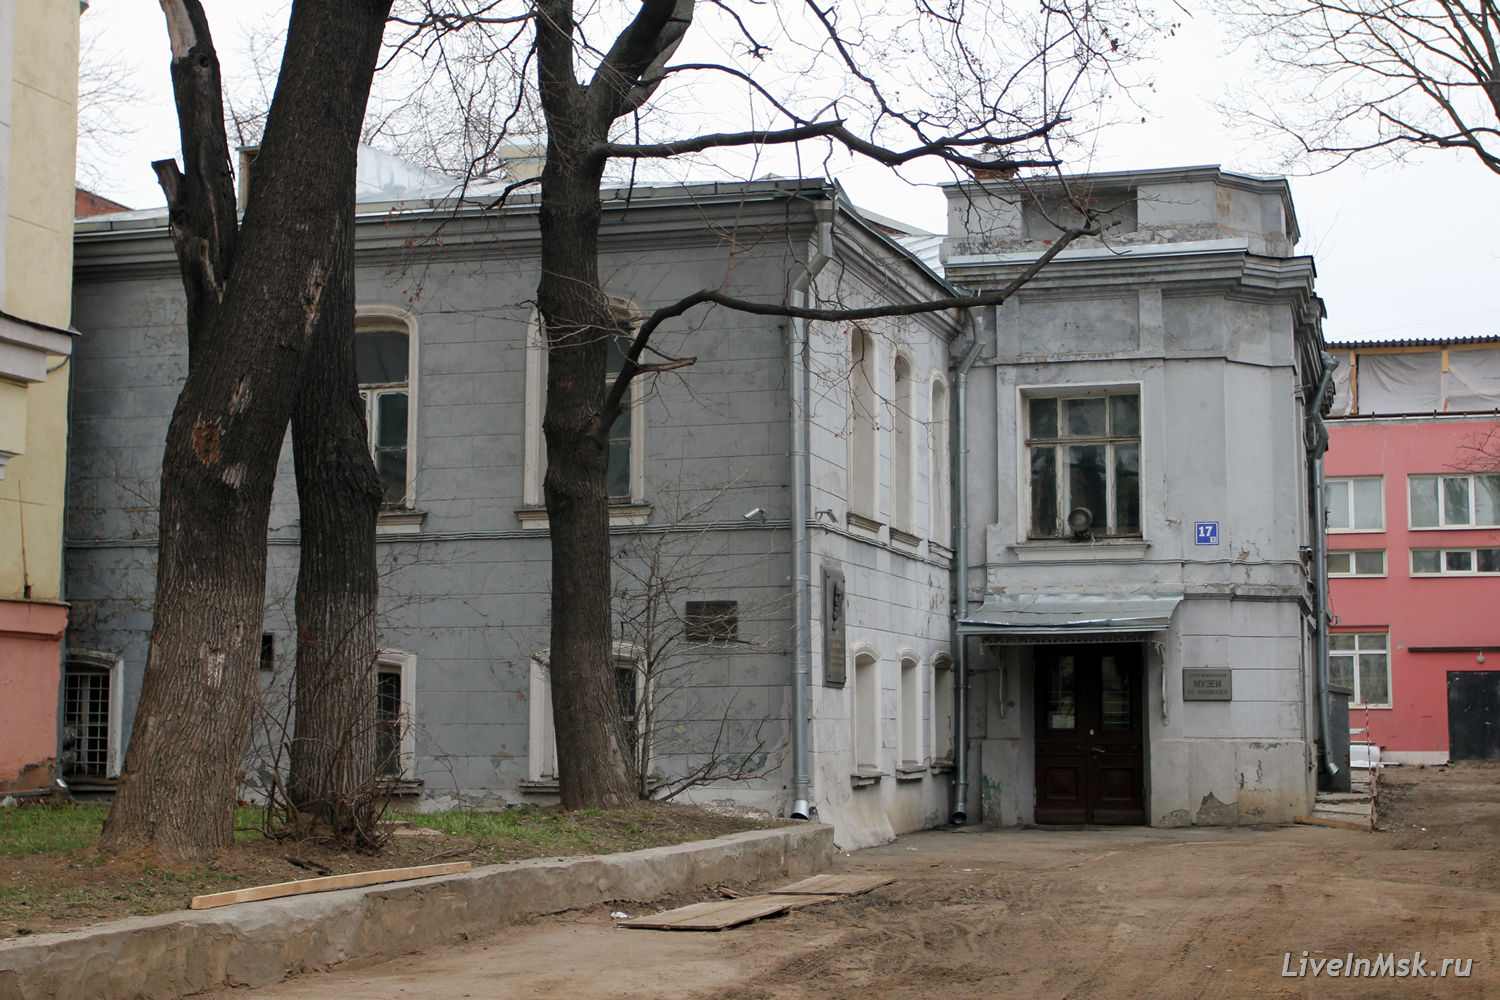 Музей Н.Е. Жуковского. Фото 2014 года